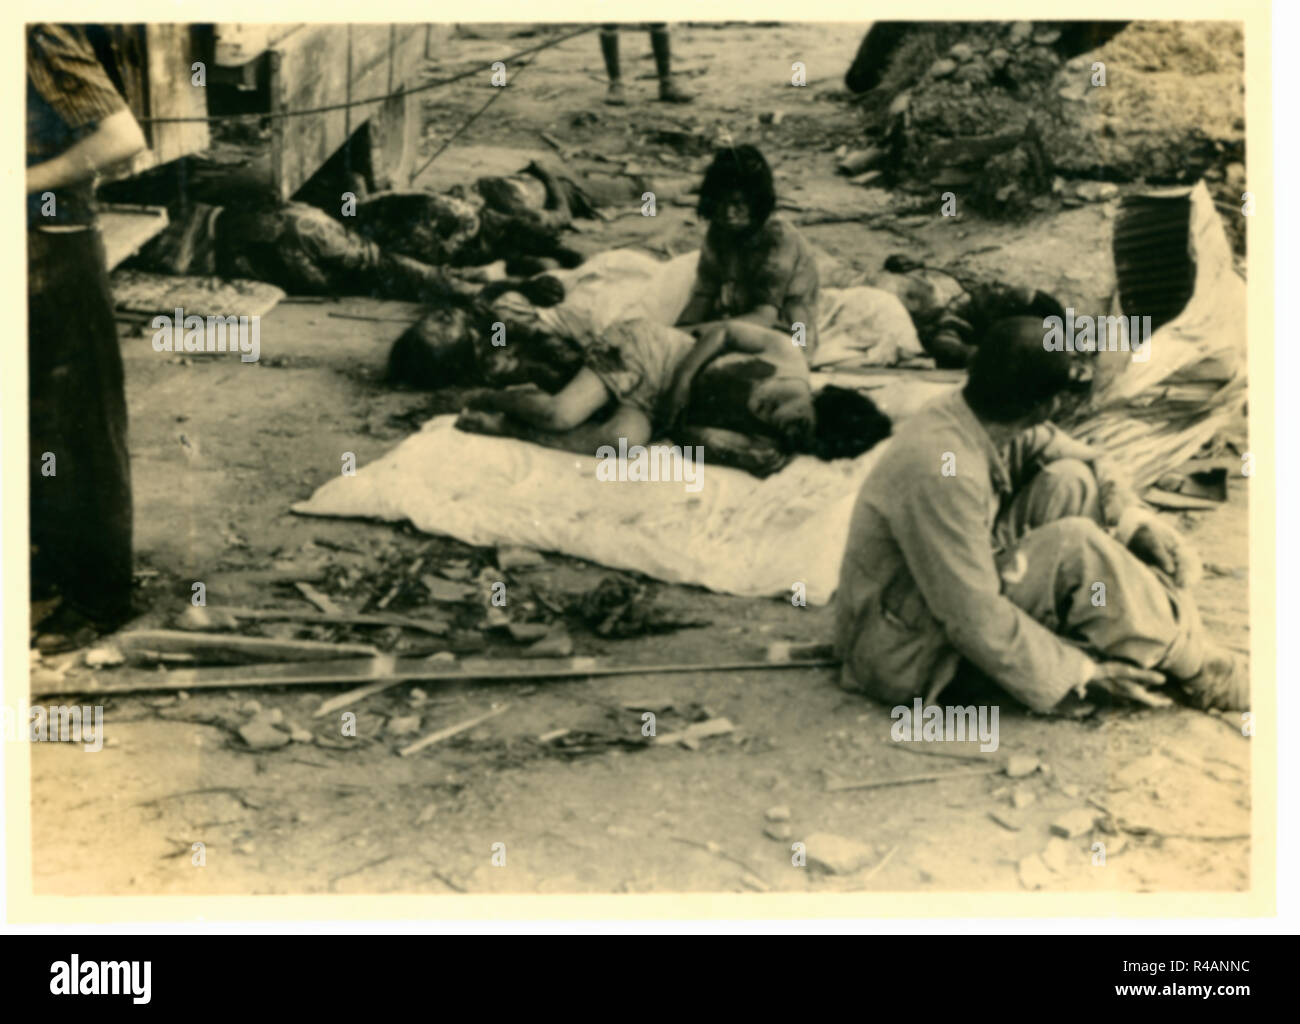 Hibakusha survivors victims of atomic bombing in devastated ruins wasteland, Hiroshima, Japan, 1945 Stock Photo